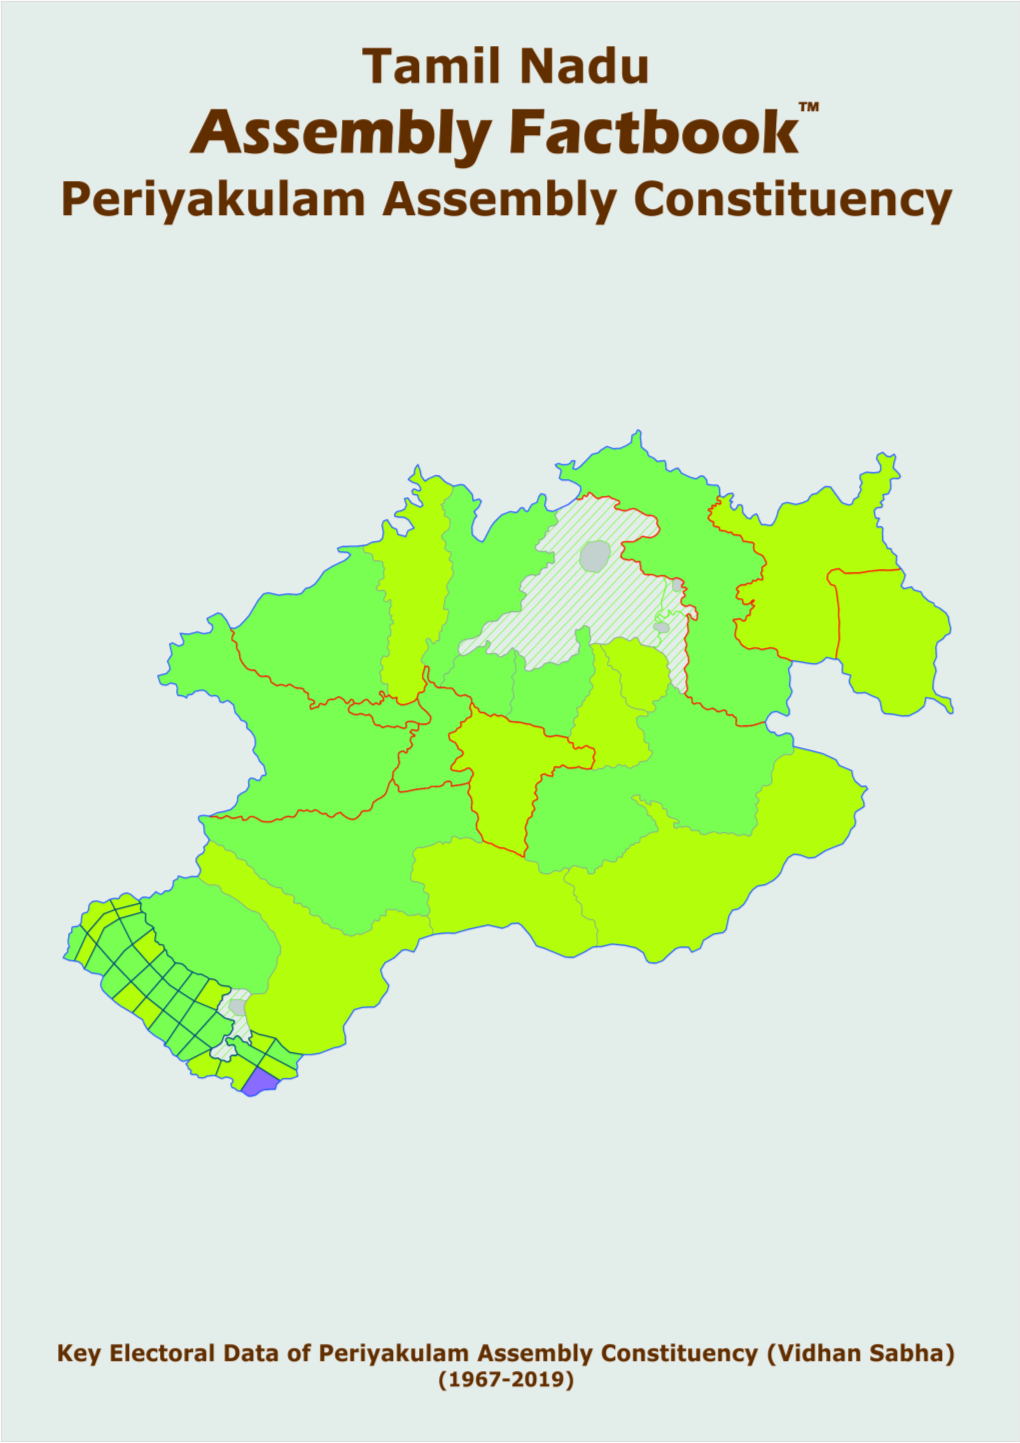 Periyakulam Assembly Tamil Nadu Factbook